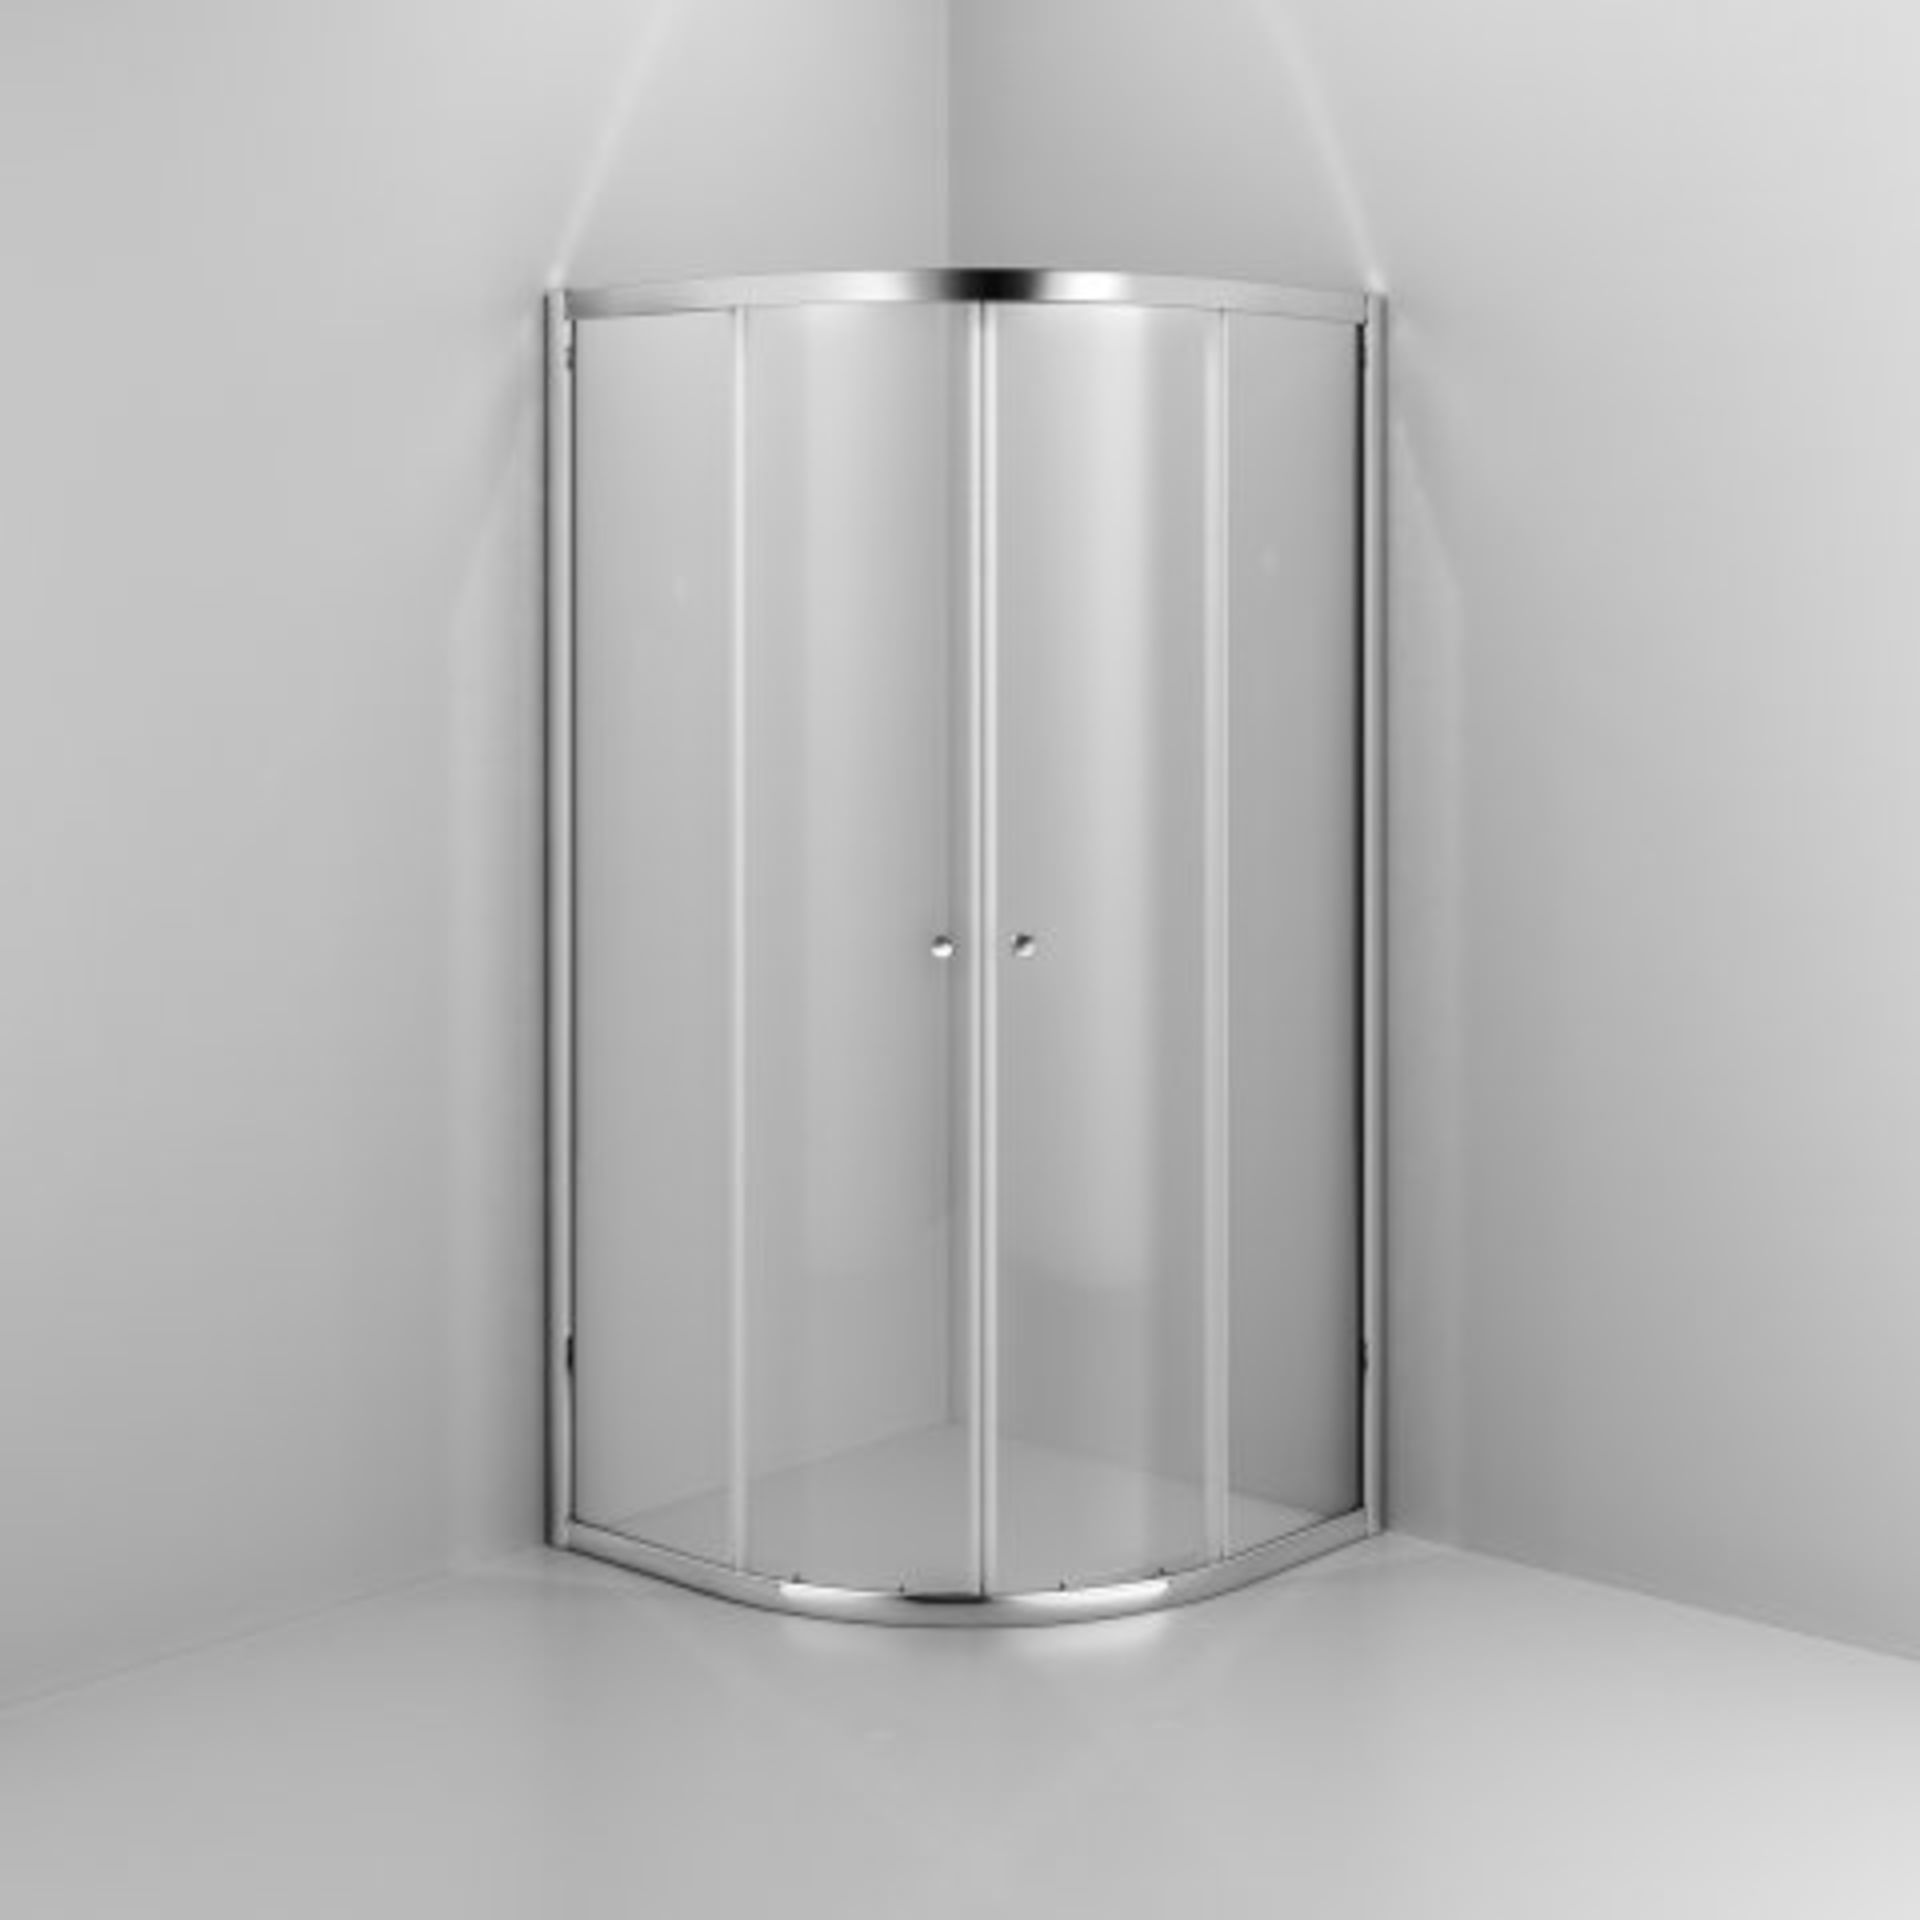 (J177) 800x800mm - Elements Quadrant Shower Enclosure. RRP £199.99. Budget Solution Our entry - Image 5 of 5